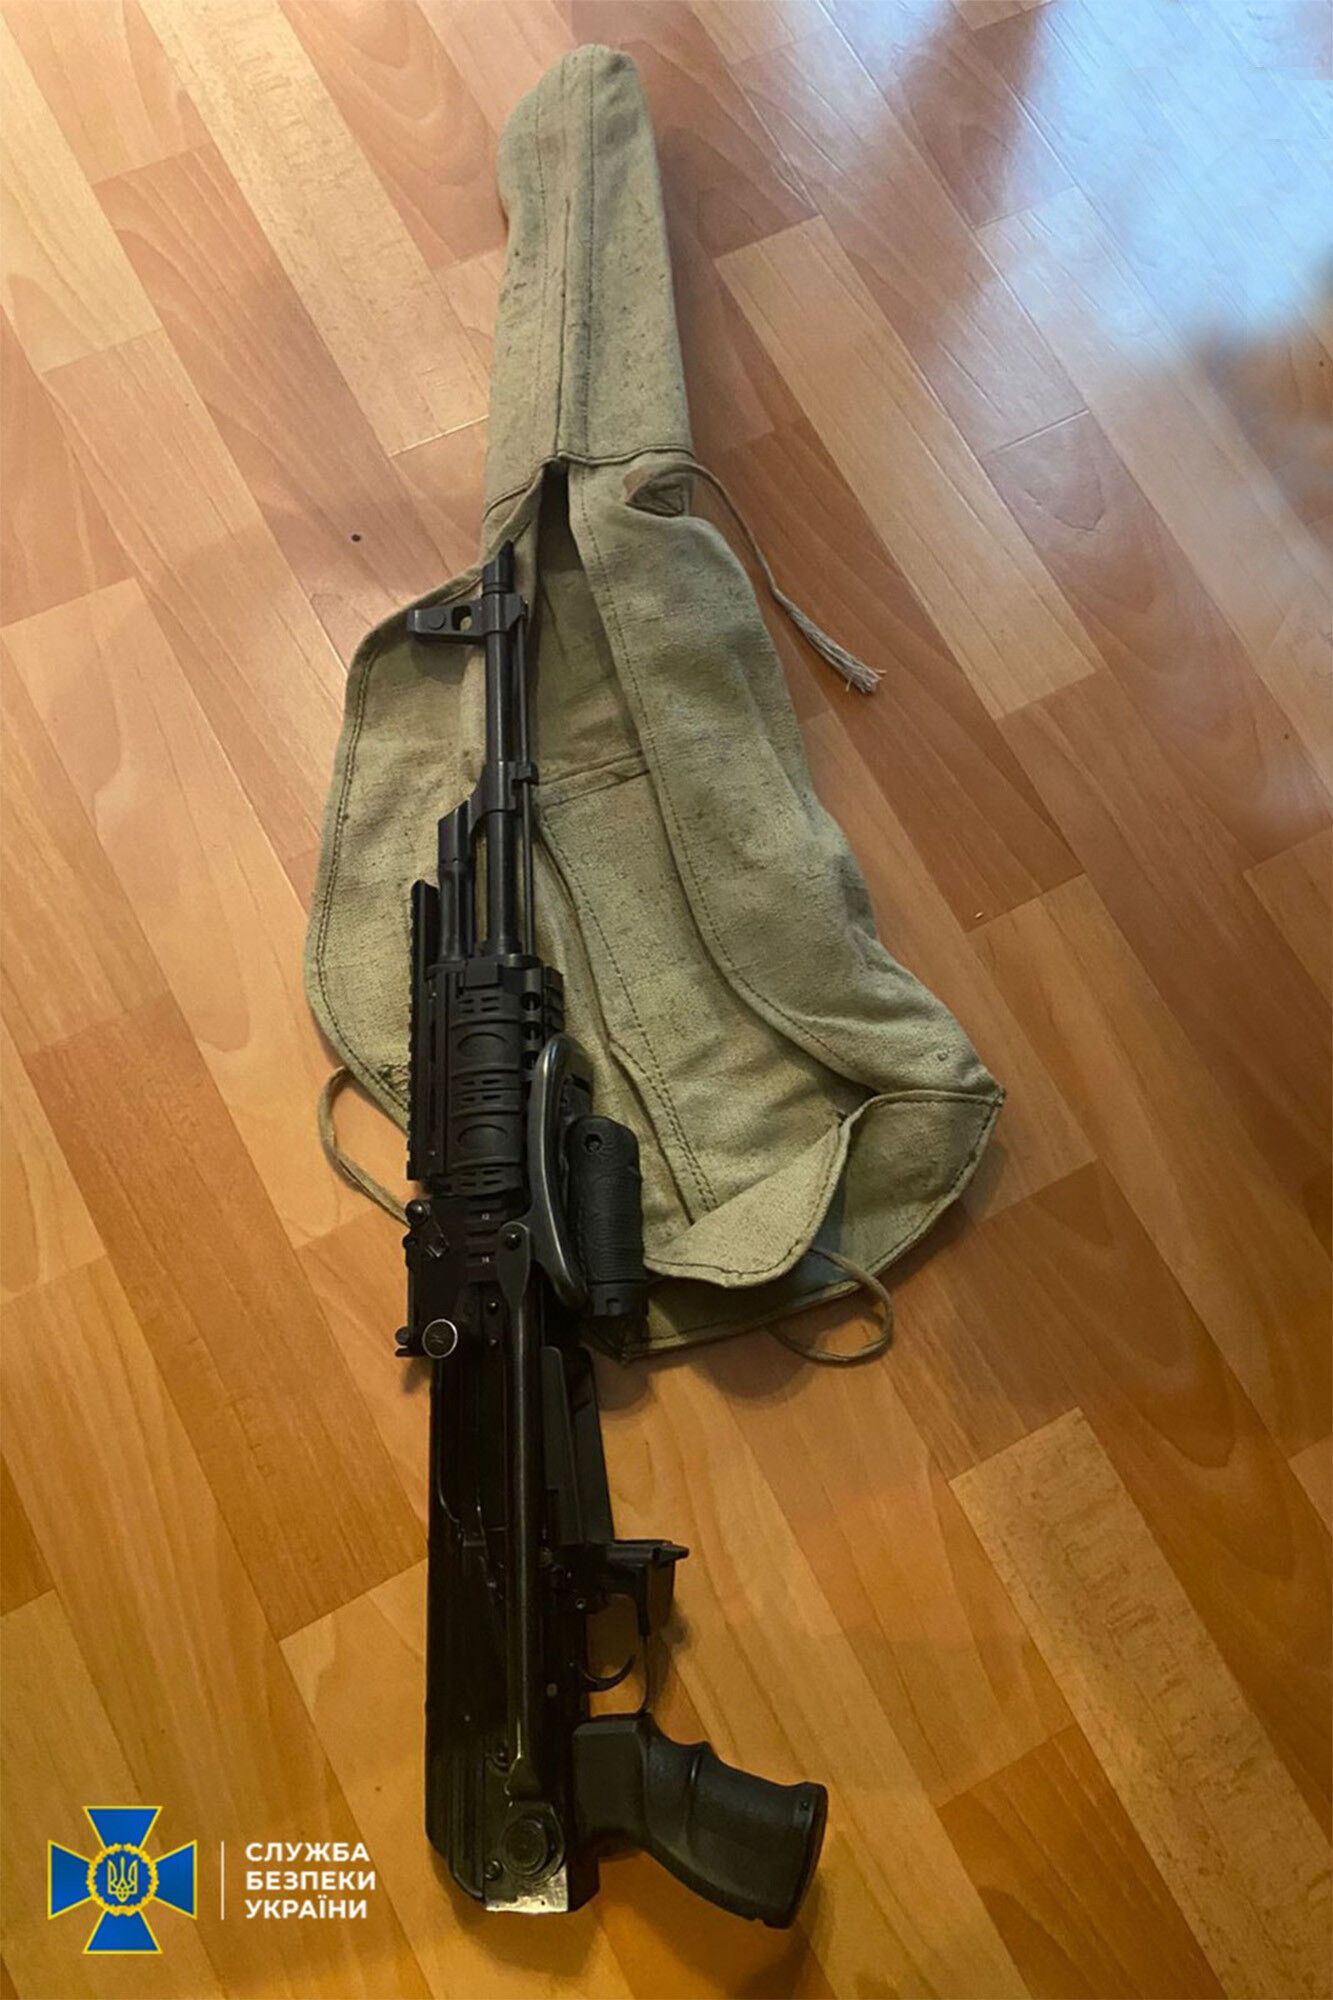 Дома у пособника РФ нашли оружие